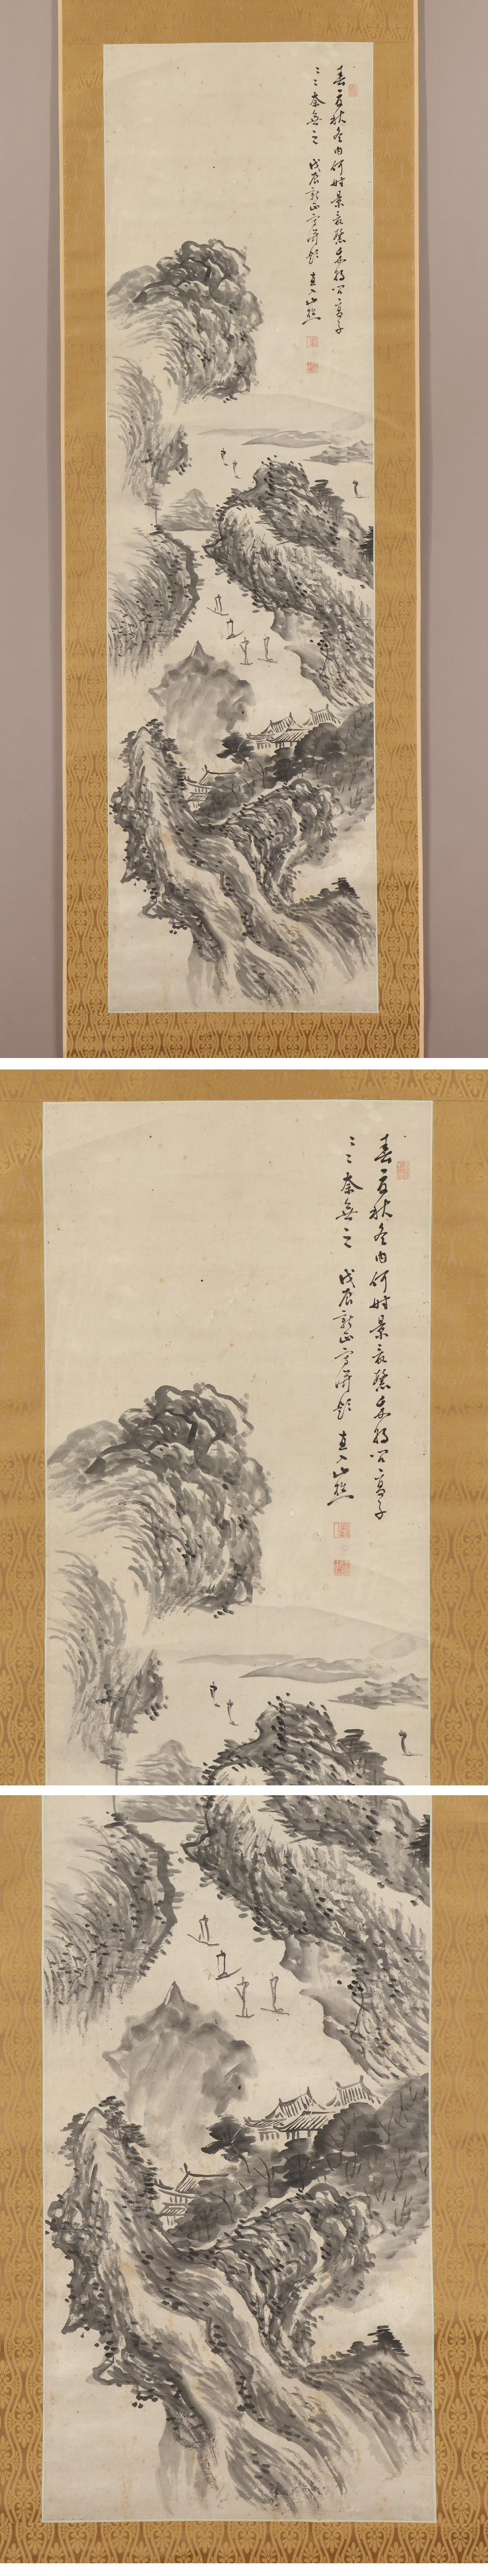 Japanese Nihonga Painting 19th c Edo Scroll by Tonomura Chokunyu River landscape For Sale 5